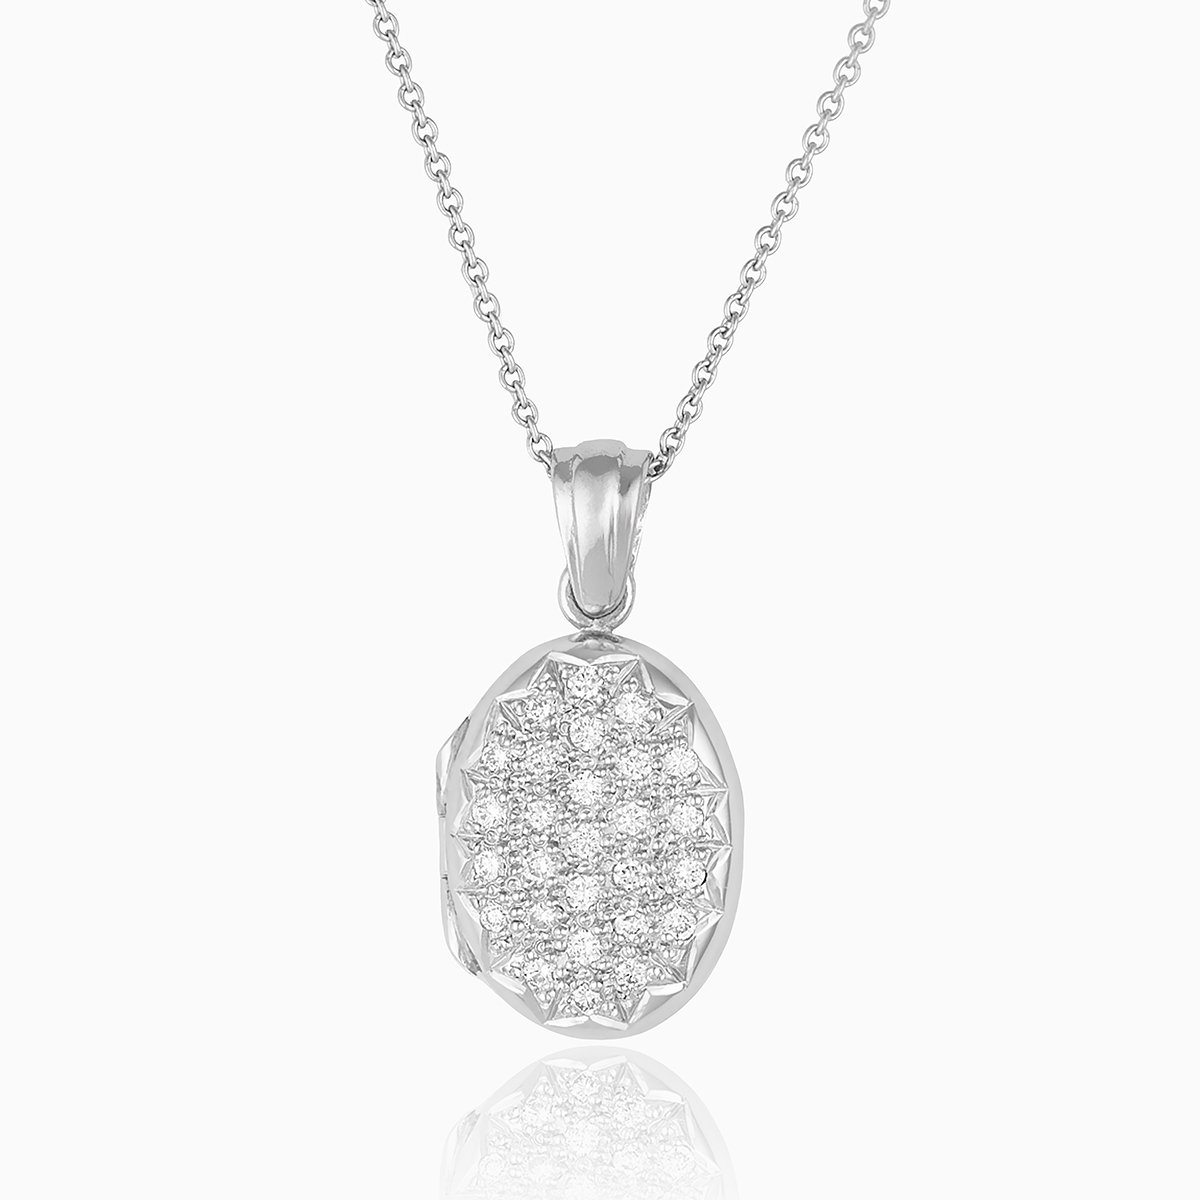 Platinum petite oval locket pave set with diamonds on a platinum trace chain